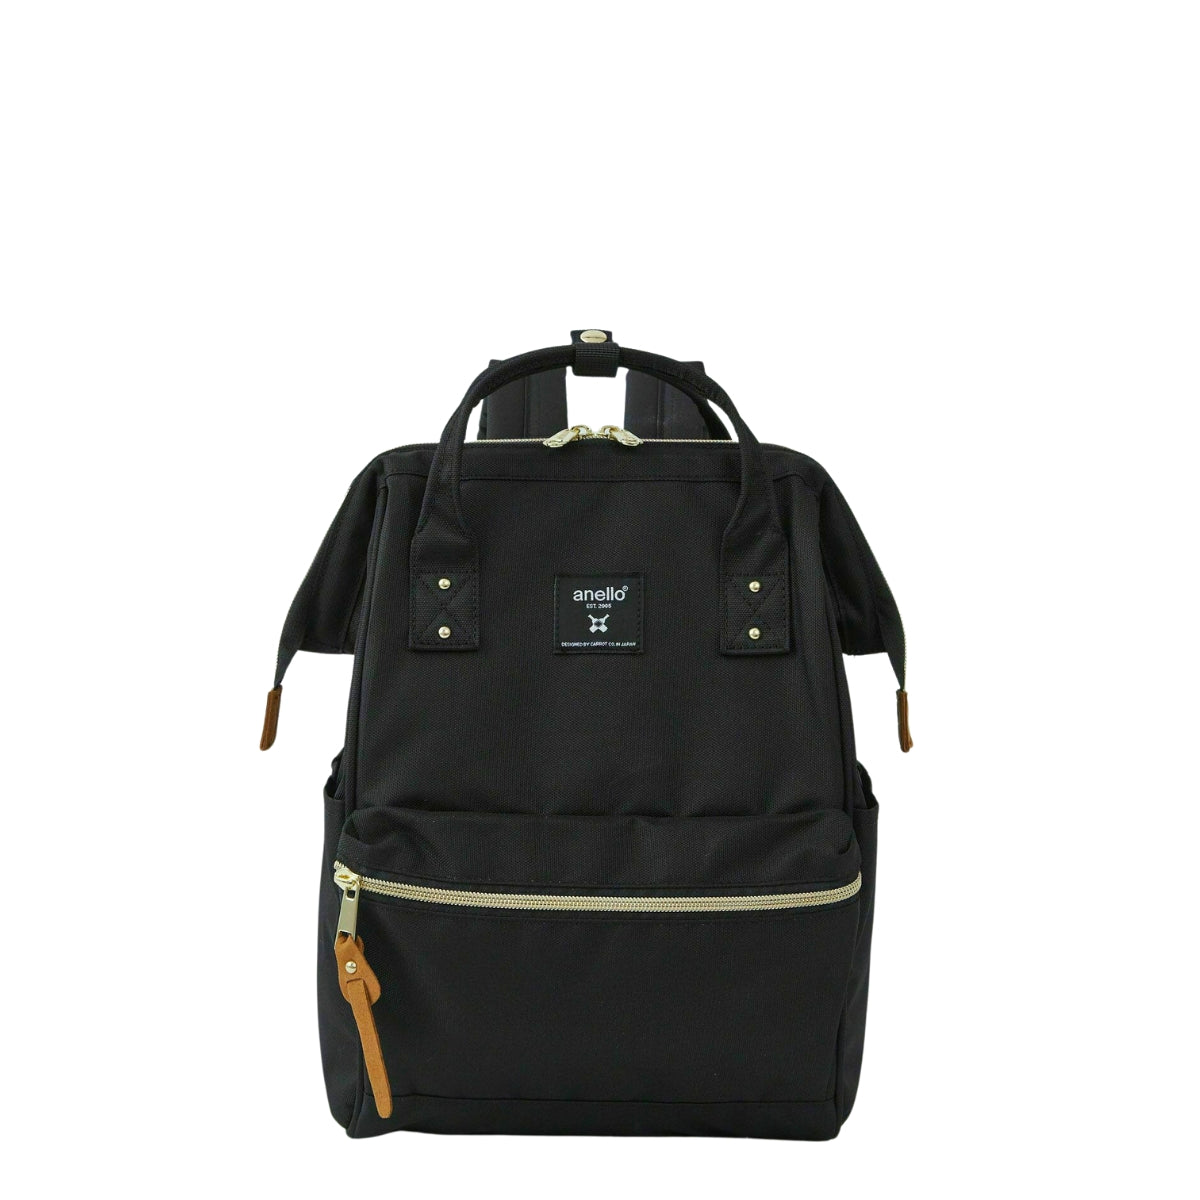 Anello Cross Bottle Backpack Small in Black